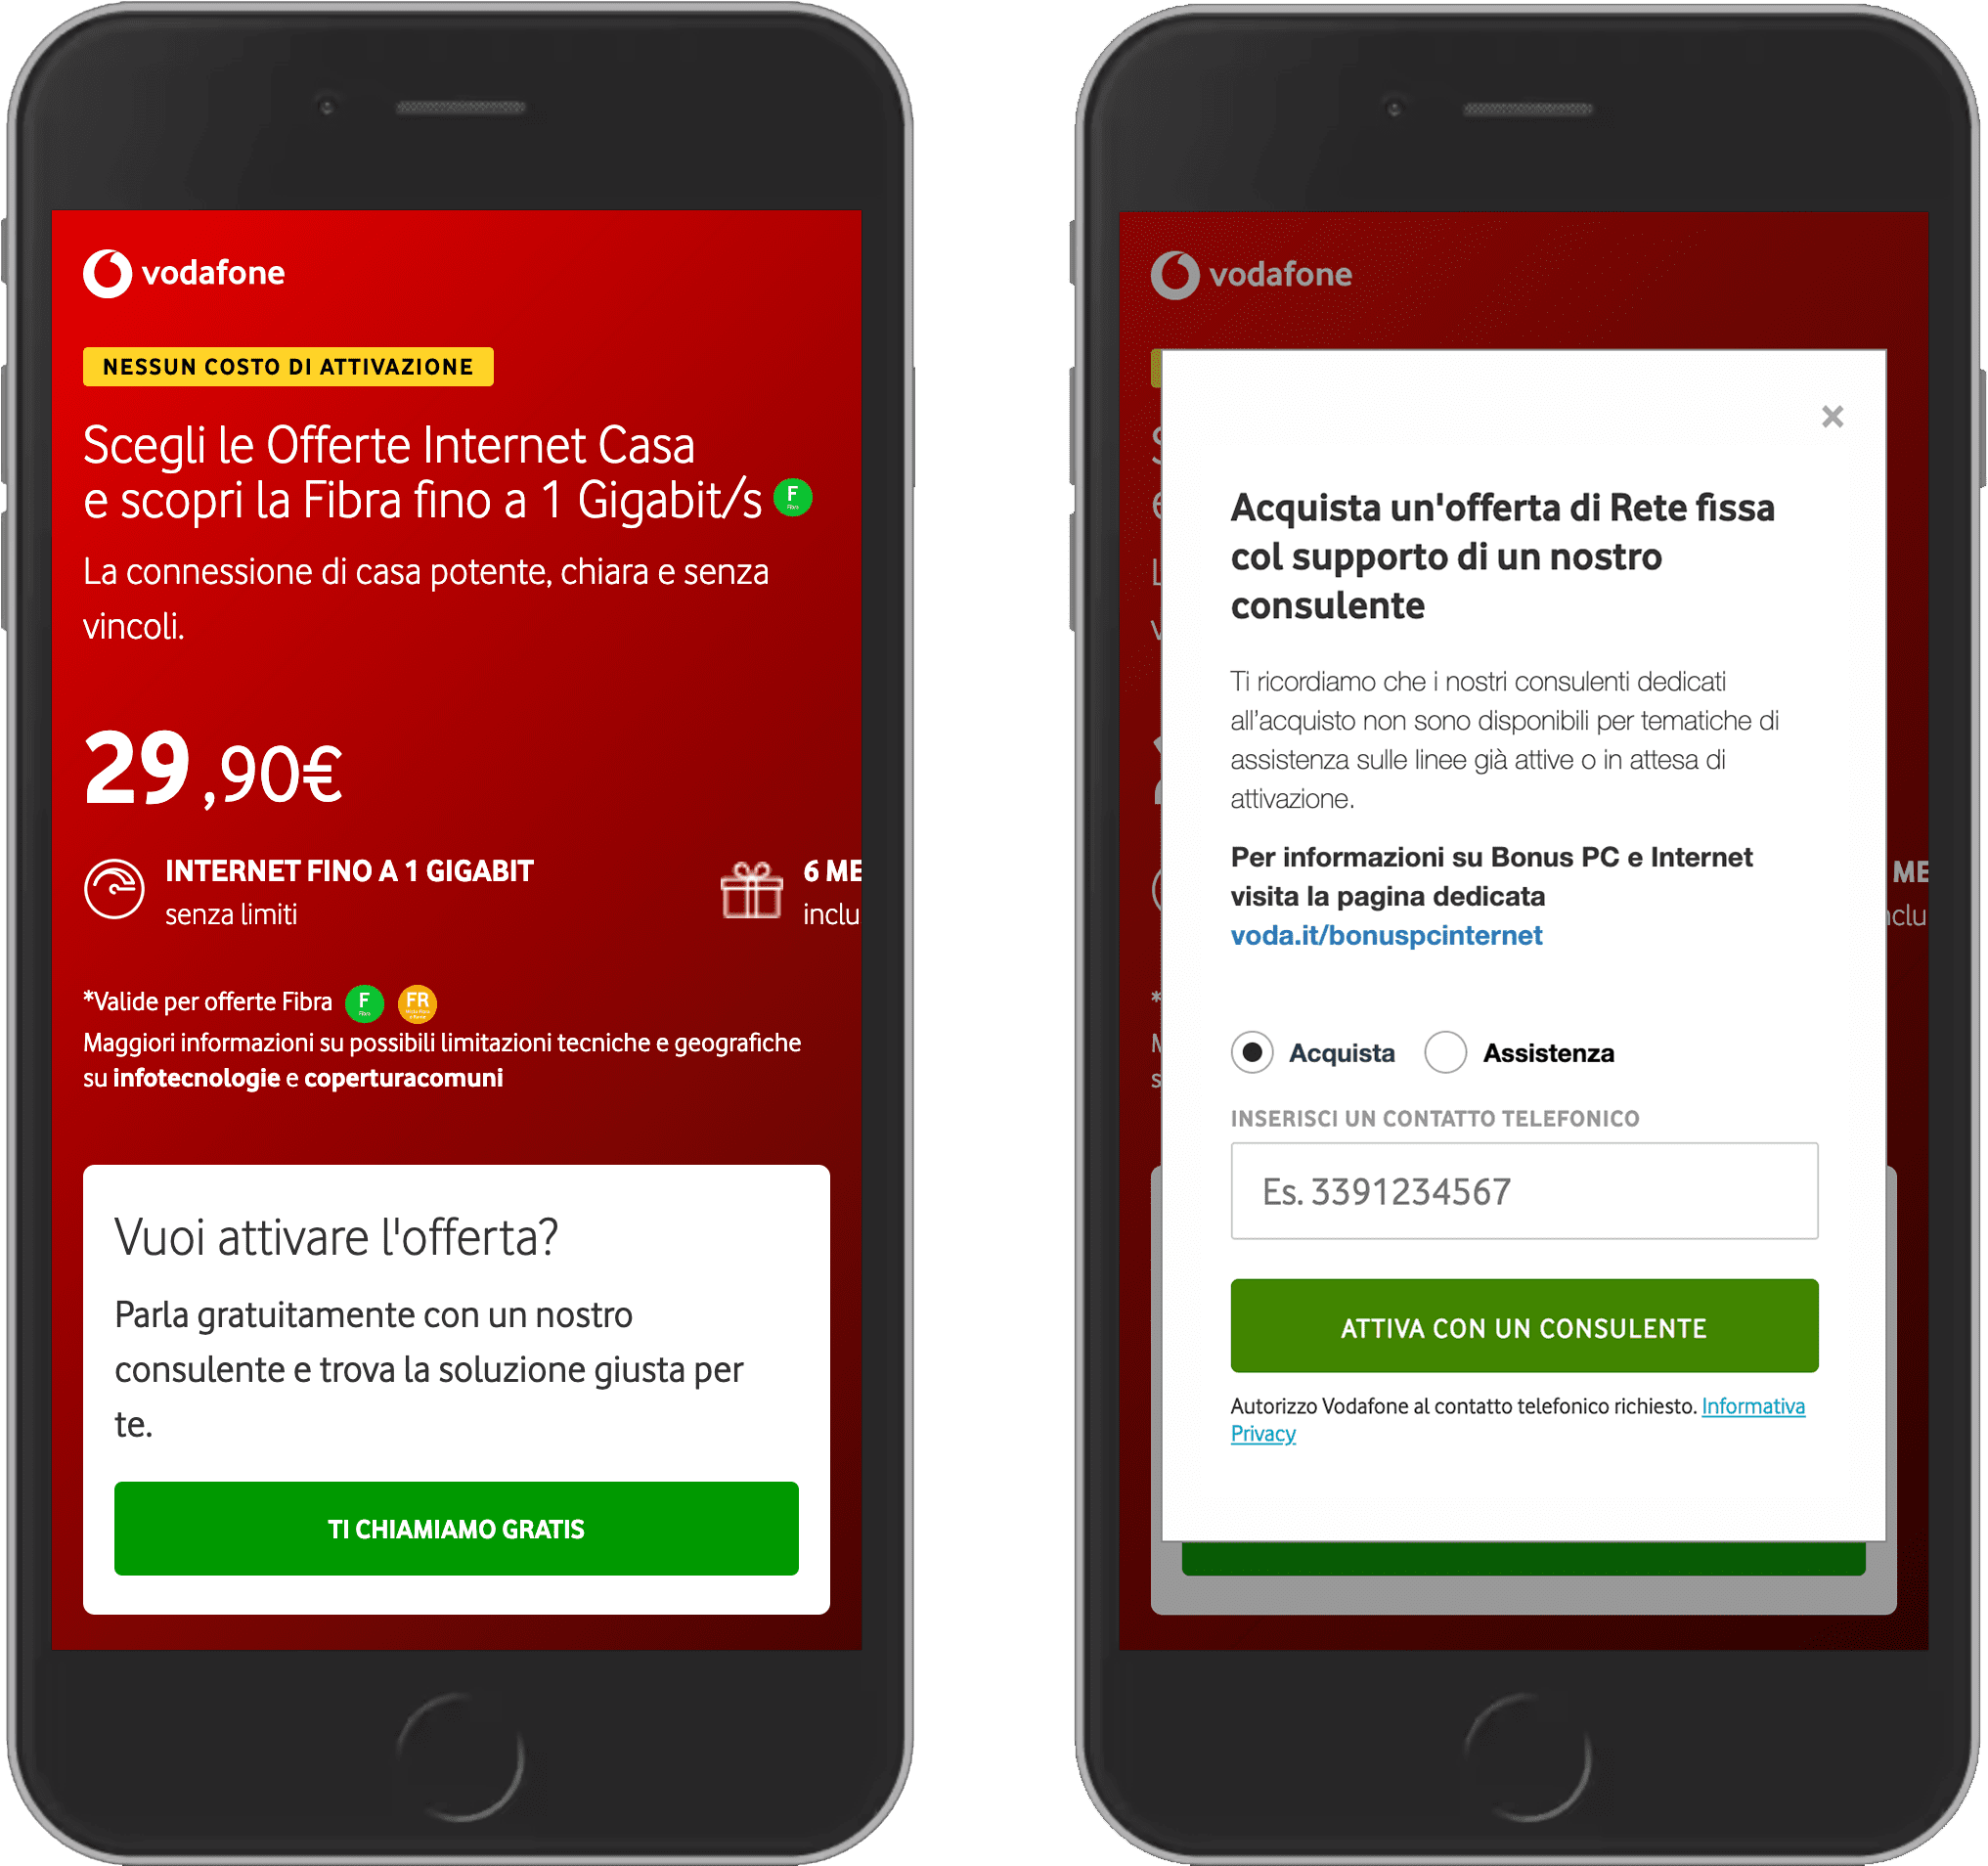 兩張 Vodafone 網站的螢幕截圖。